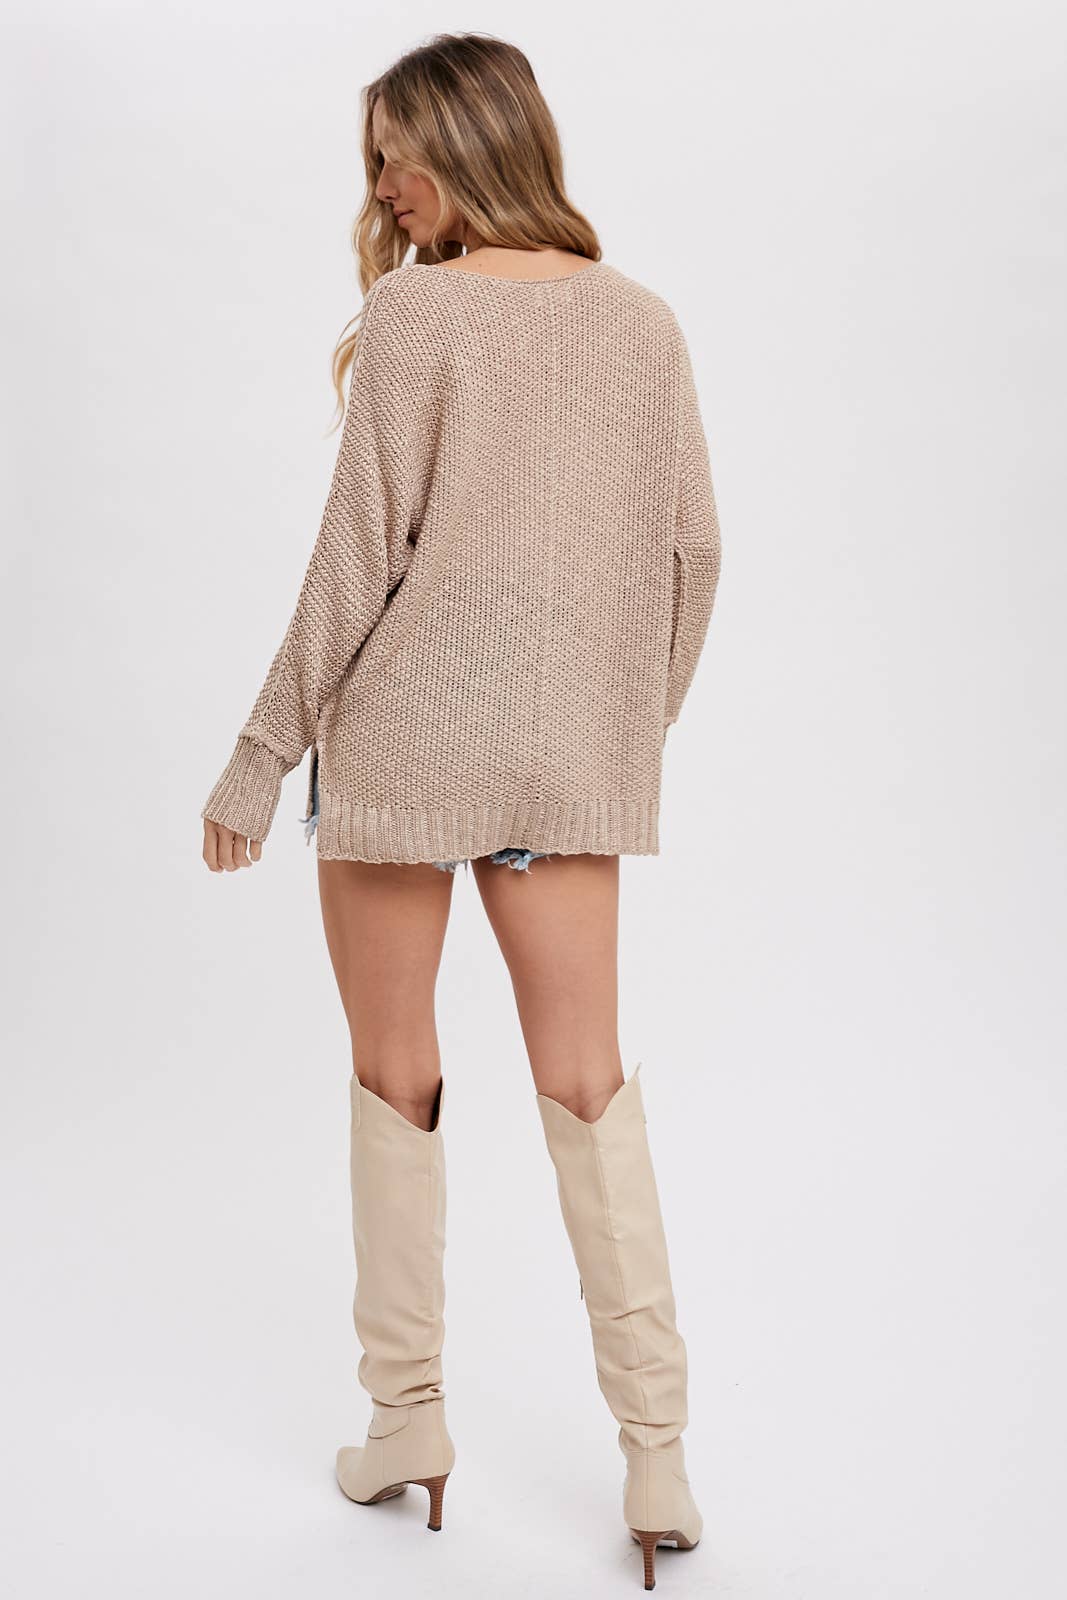 Reverse Seam Sweater - 2 colors